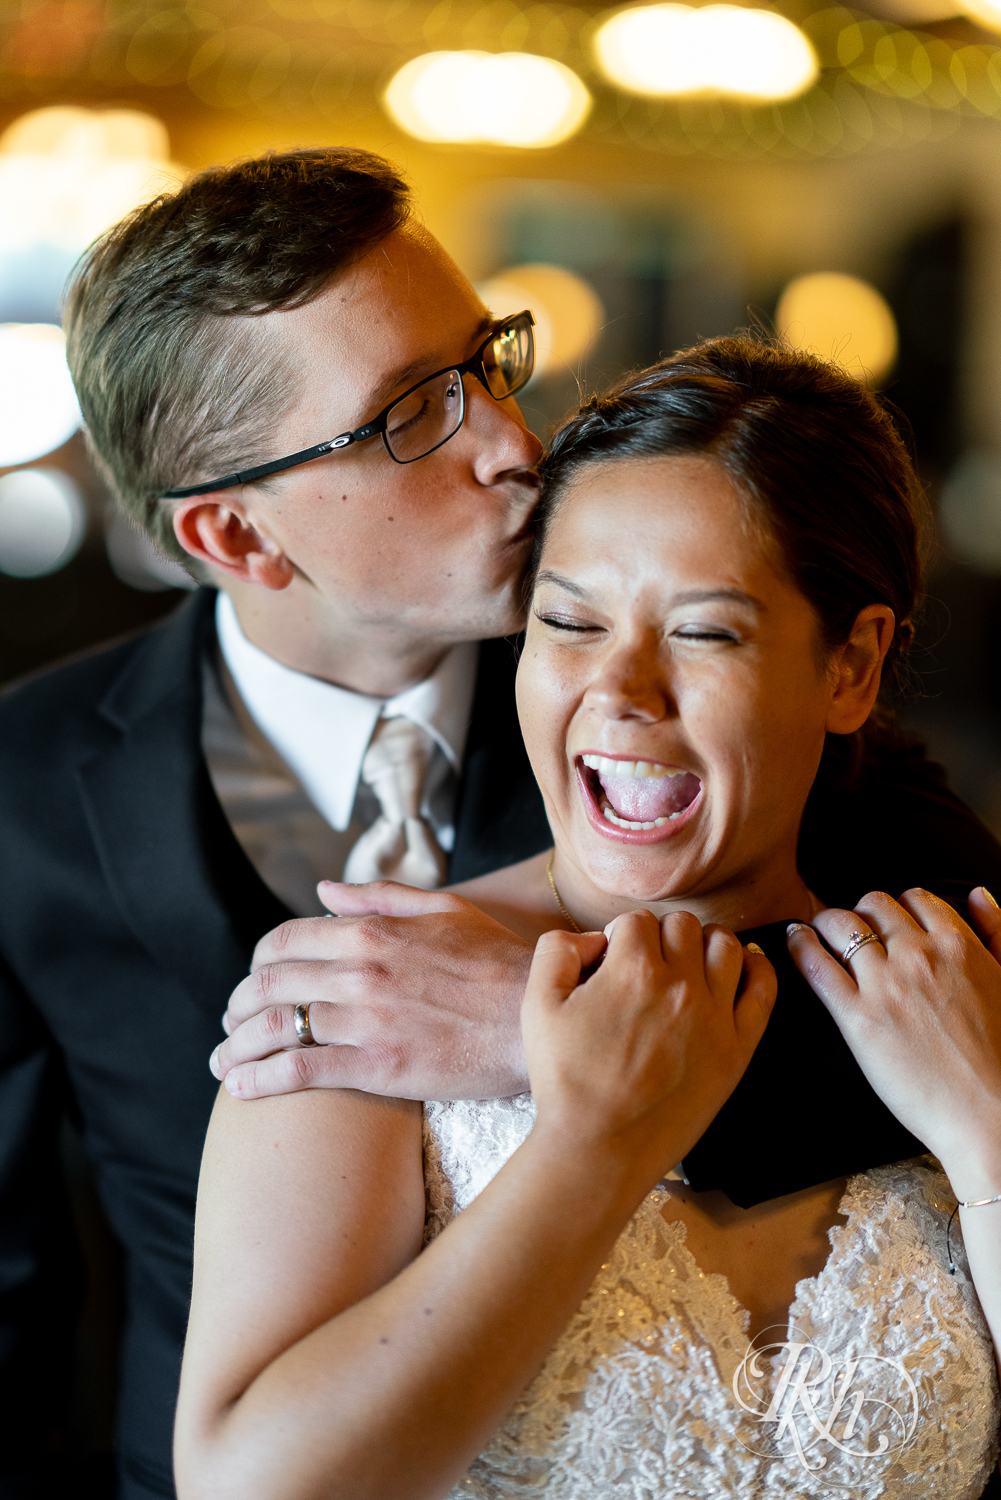 Bride and groom kiss at Kellerman's Event Center in White Bear Lake, Minnesota.